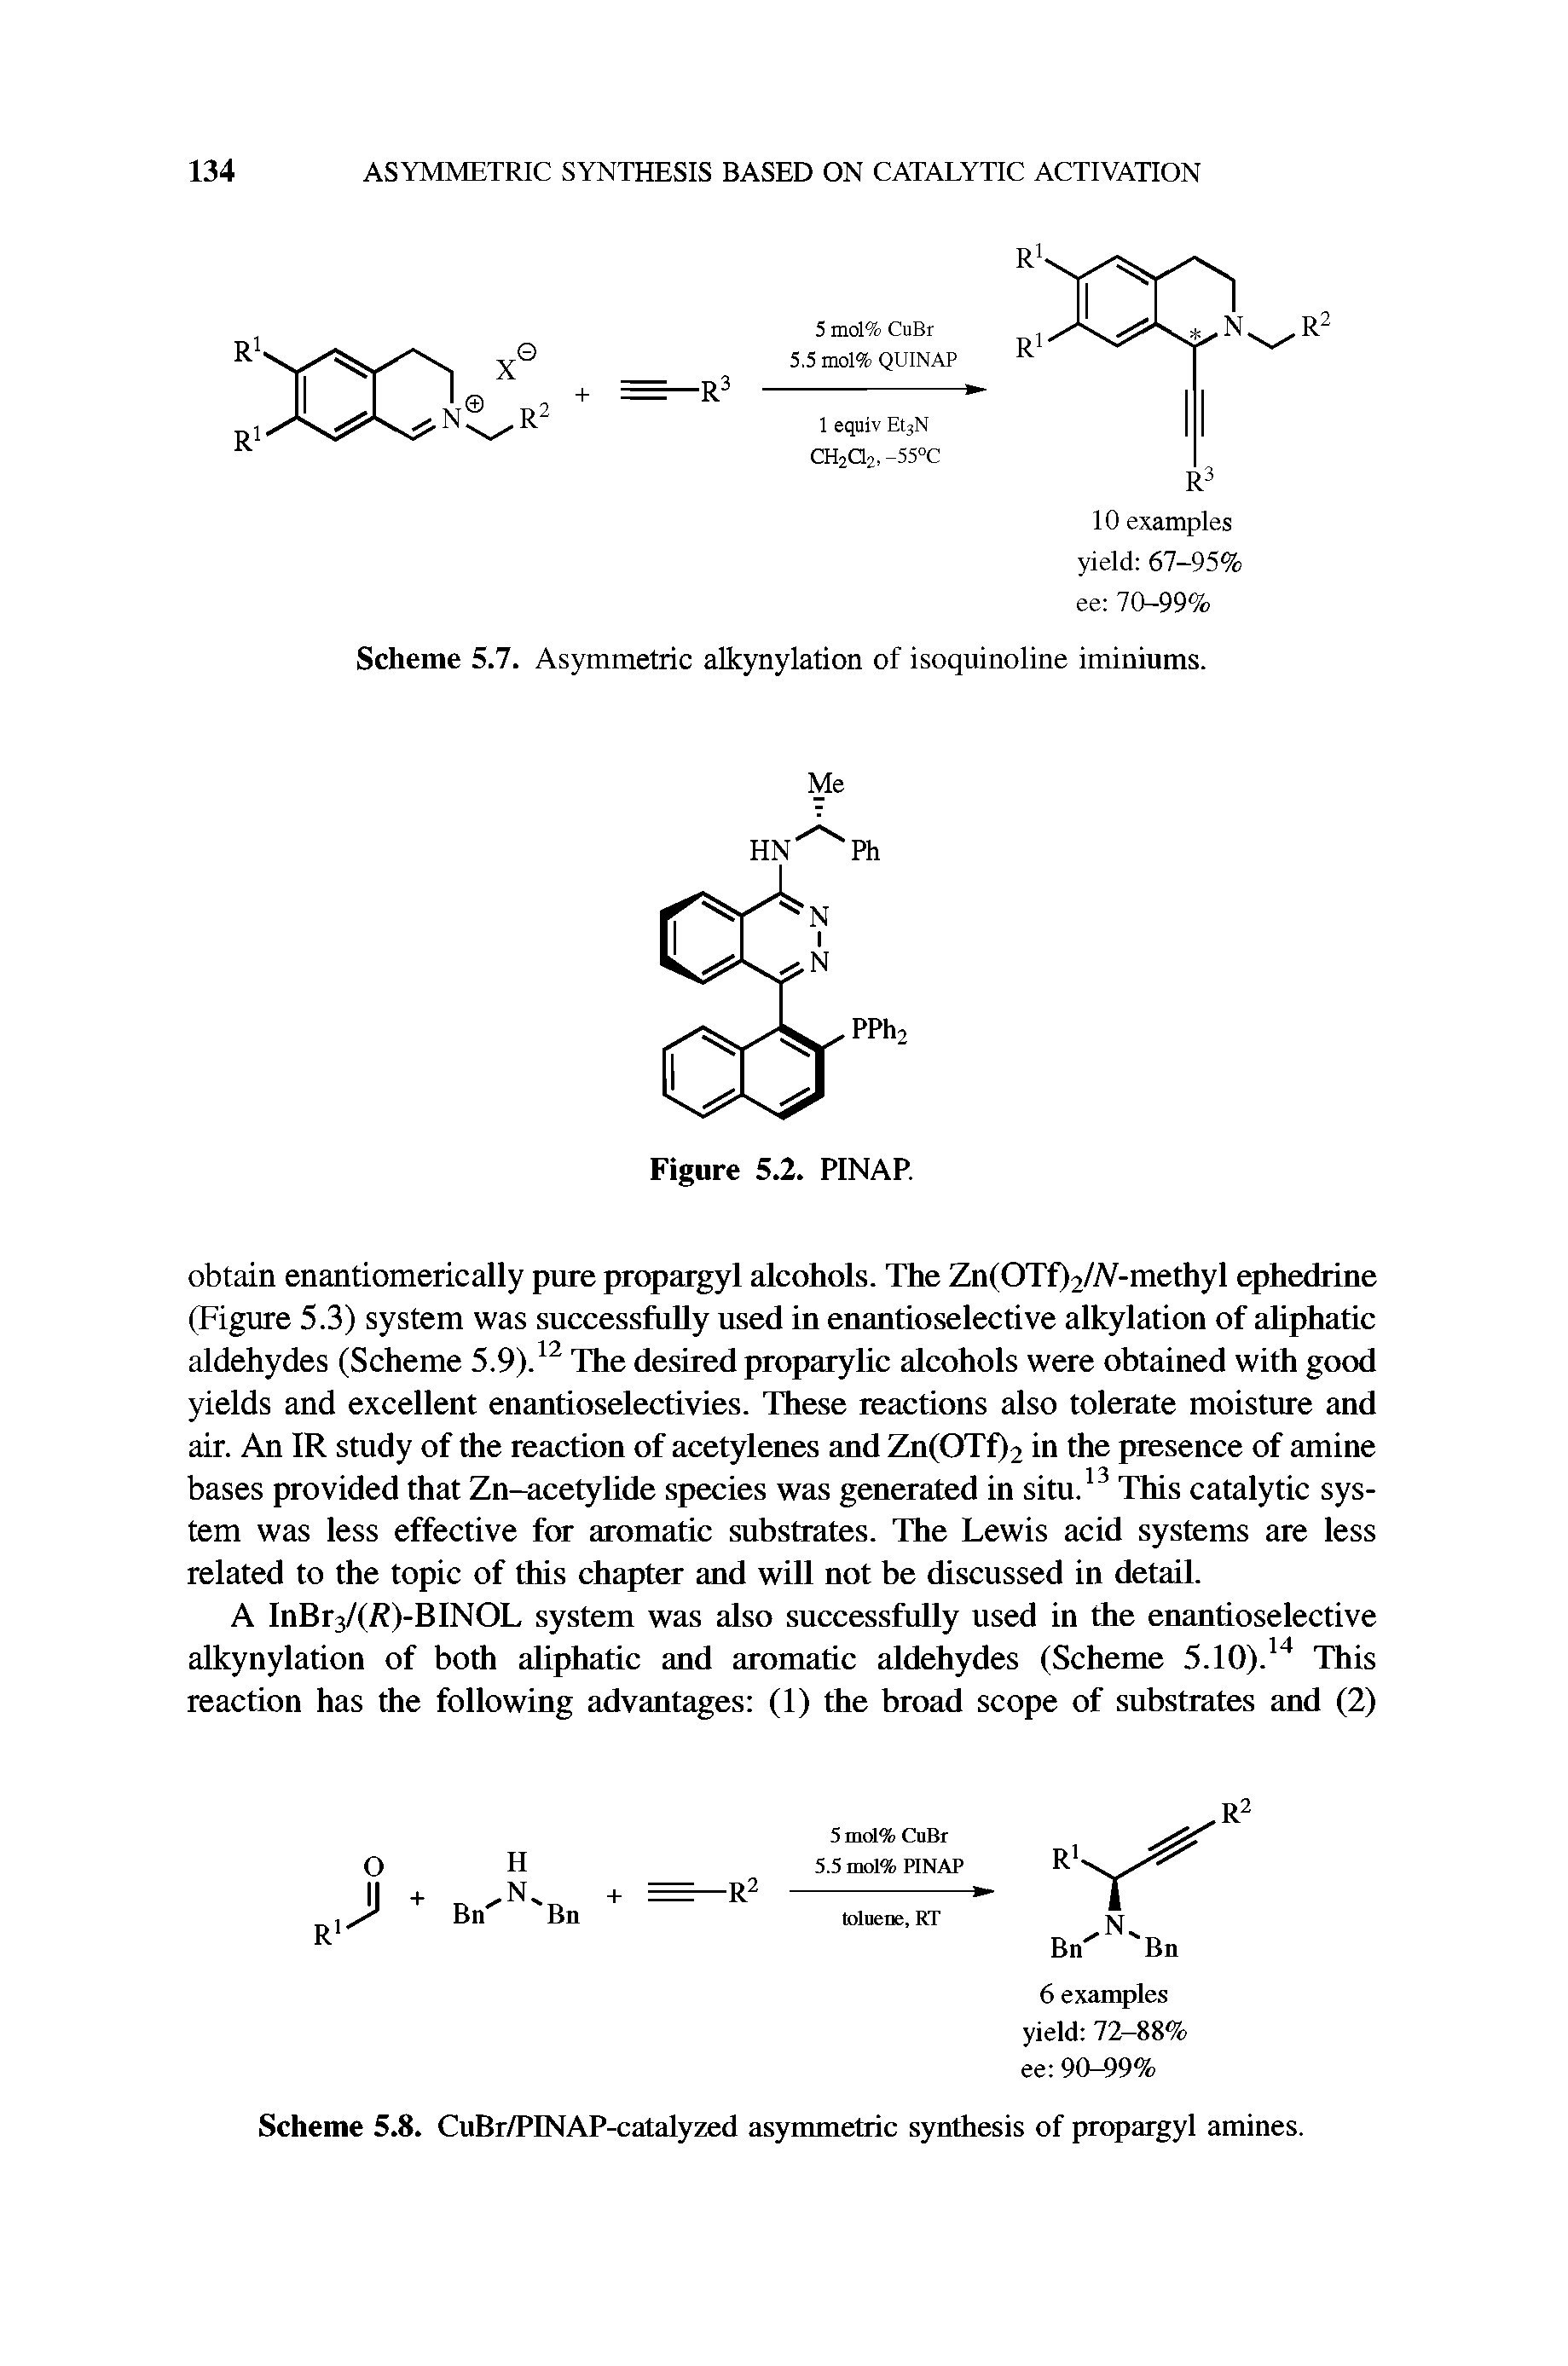 Scheme 5.8. CuBr/PINAP-catalyzed asymmetric synthesis of propargyl amines.